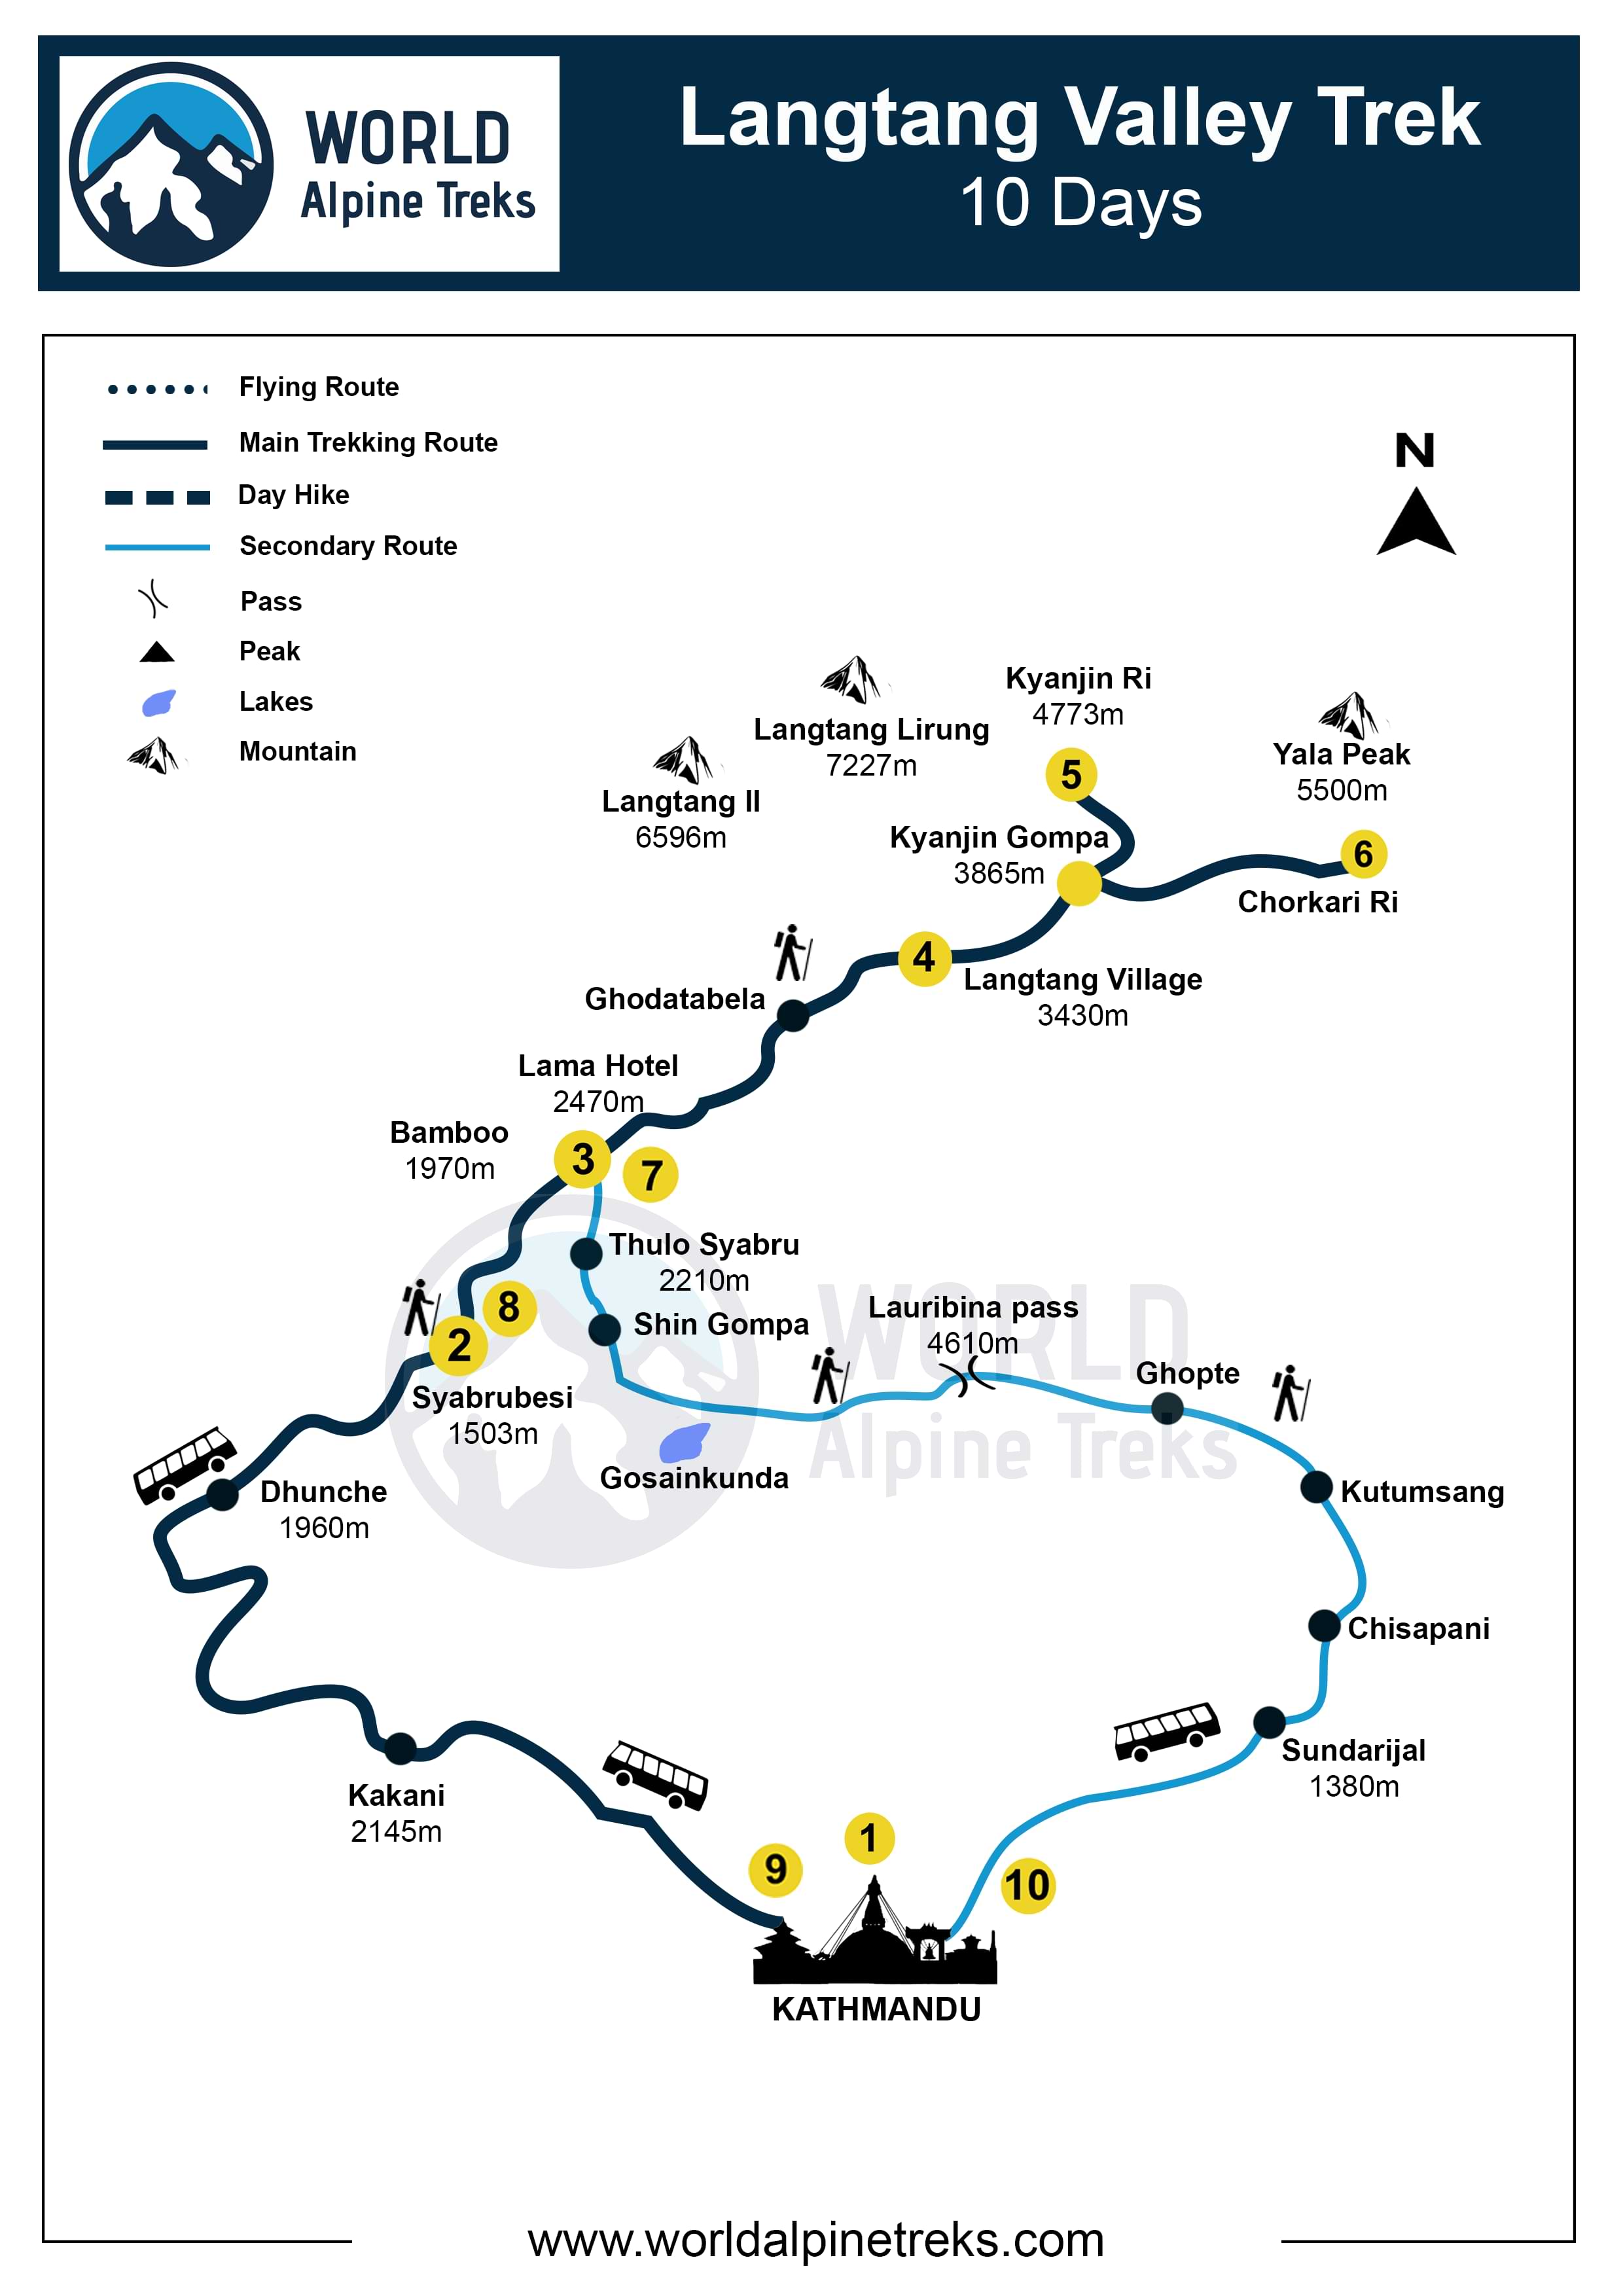 Langtang-valley-trek-map 